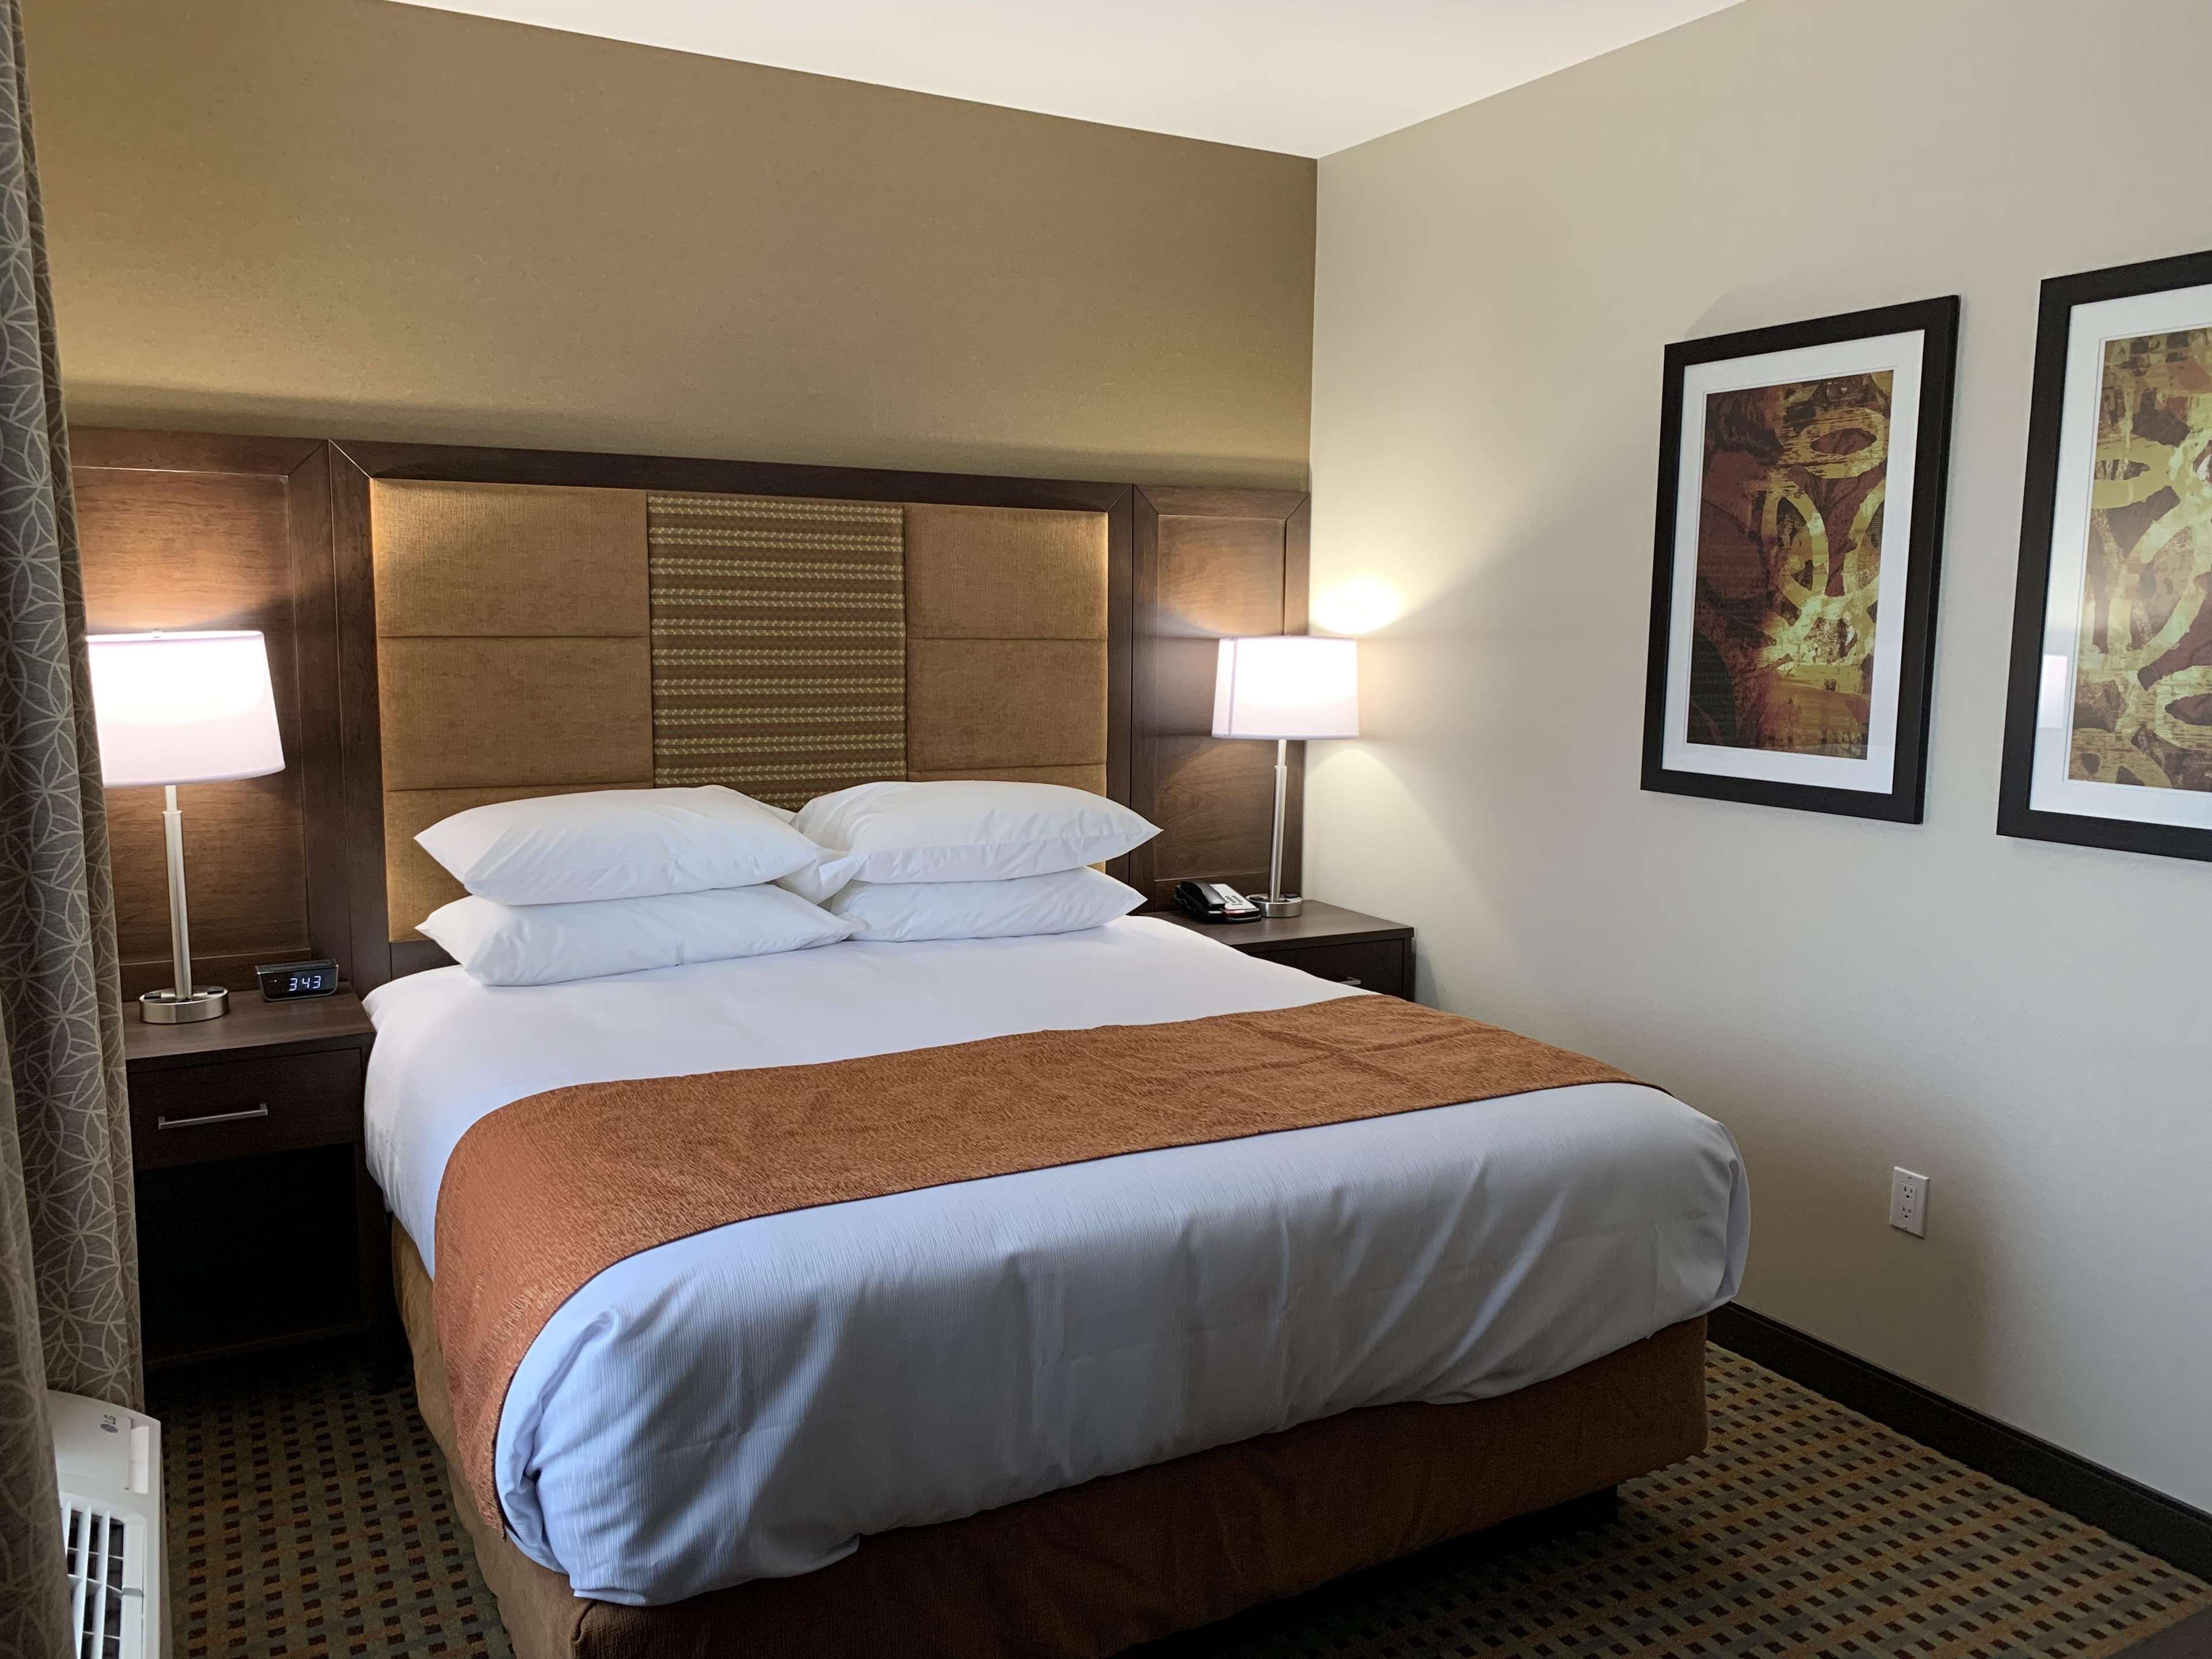 One Bedroom Suite with King Bed Best Western Plus Hinton Inn & Suites Hinton (780)817-7000